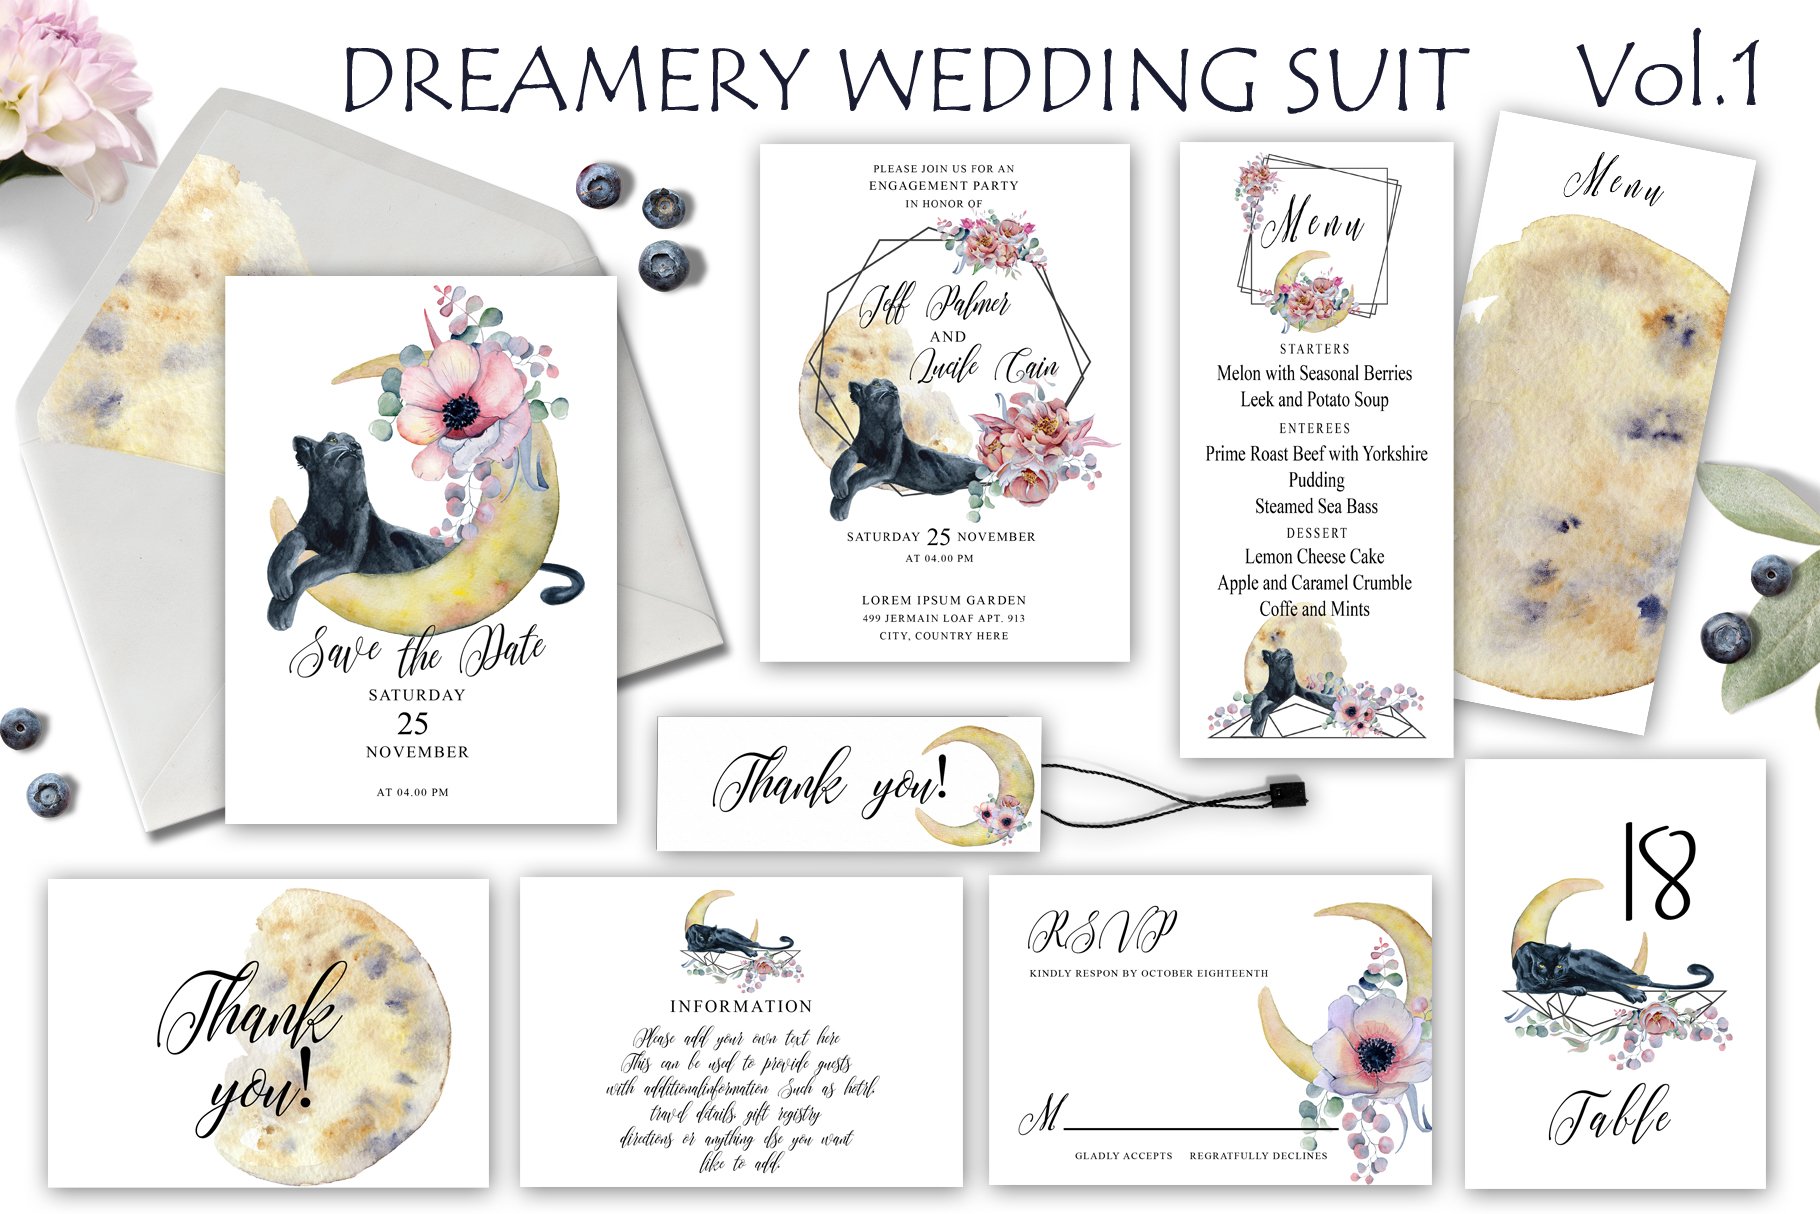 dreamery wedding suit3